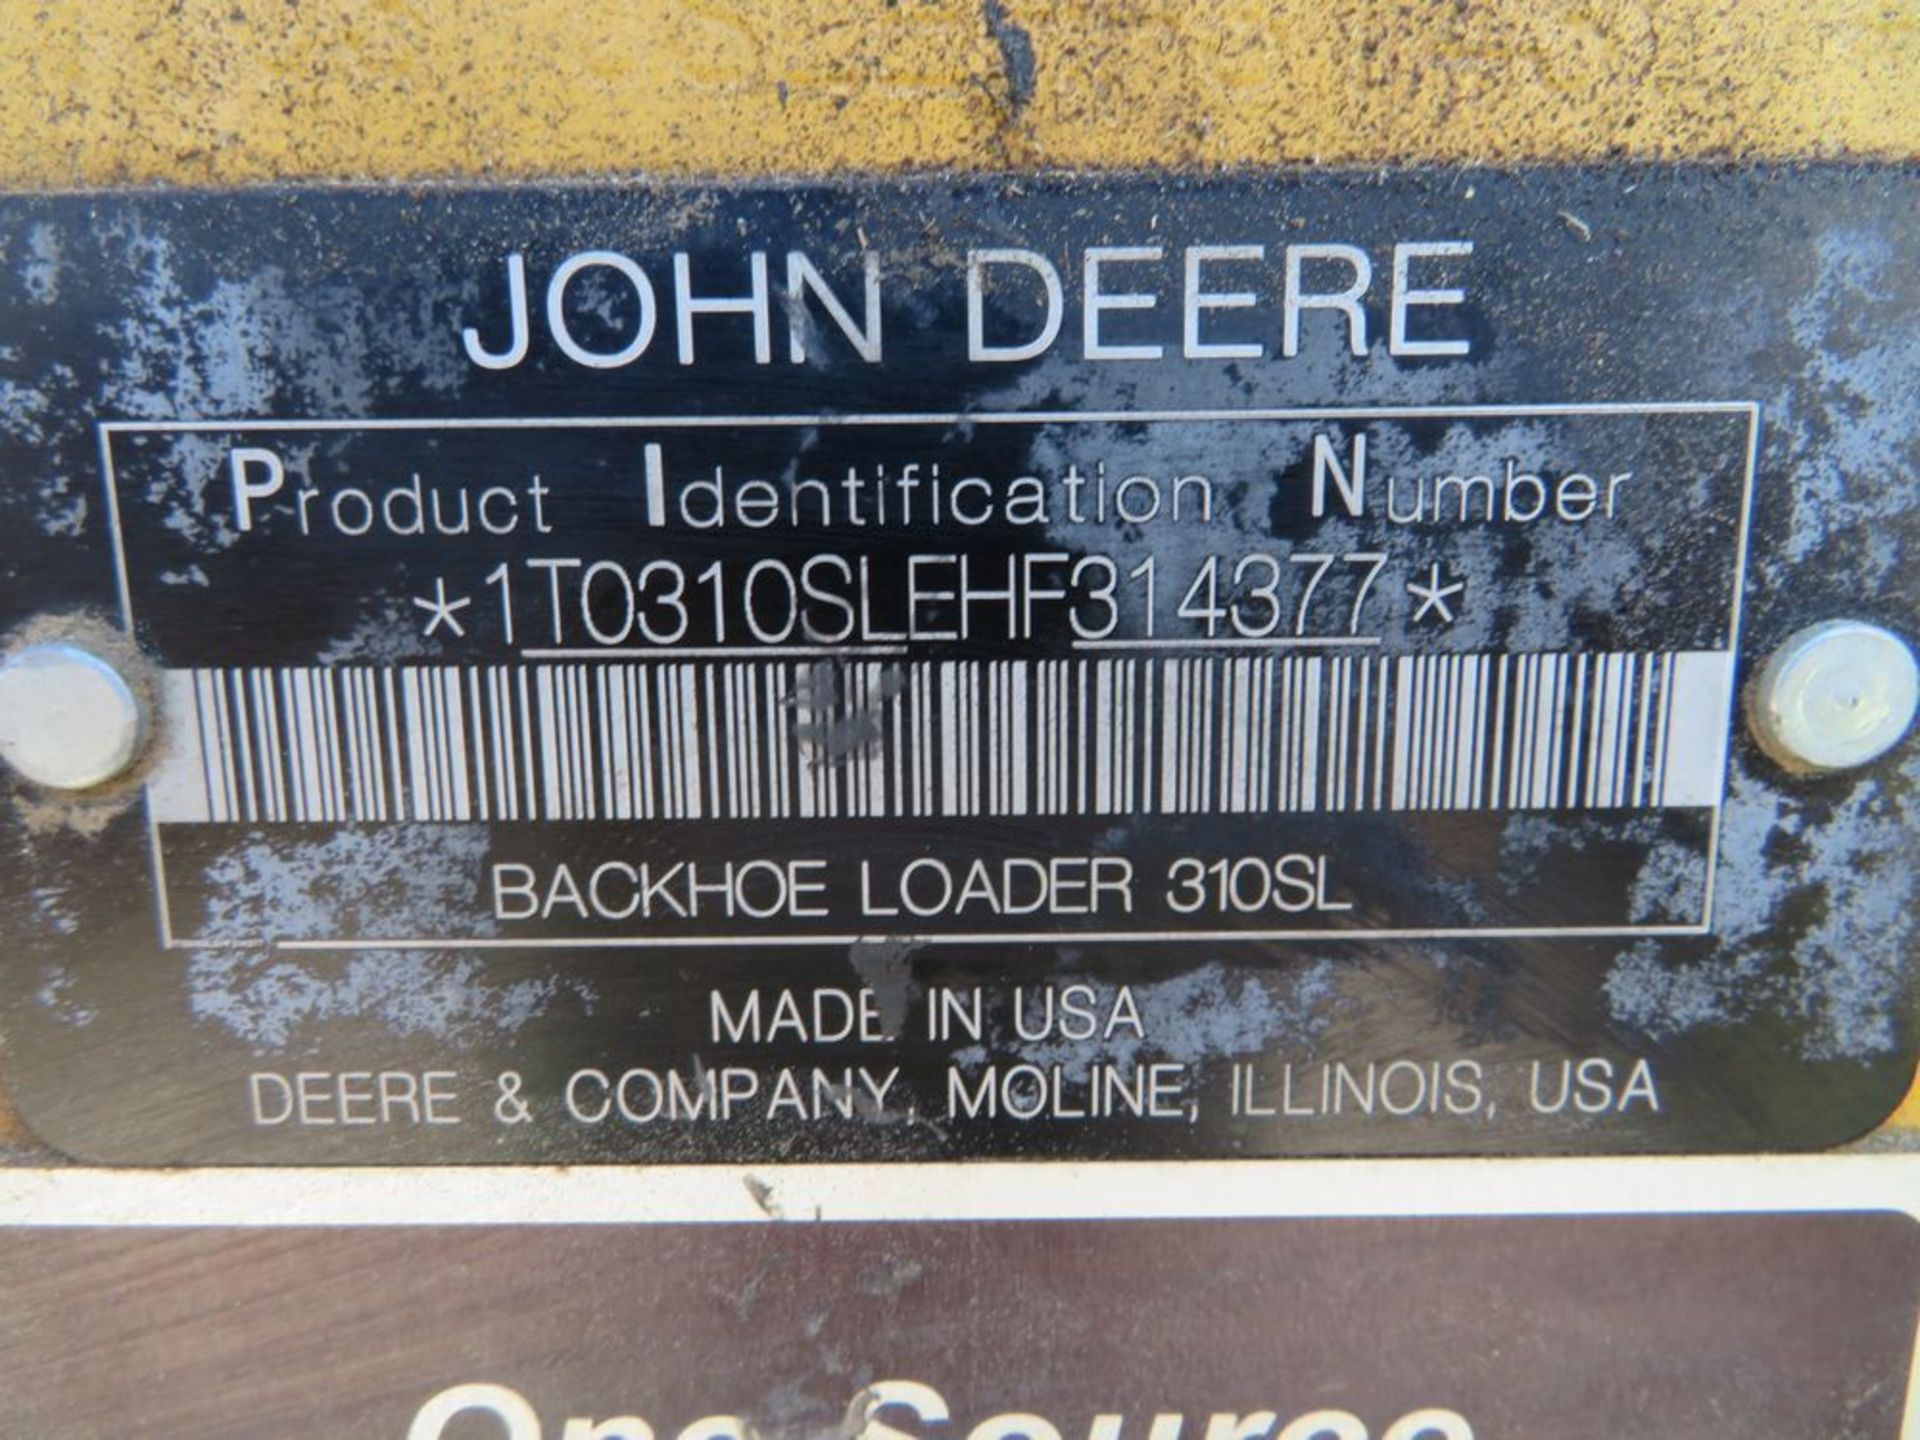 (2017) John Deere mod. 310SL Backhoe Loader Net Power 74KW (99hp) at 2,240 RPM, Max Standard - Image 10 of 10